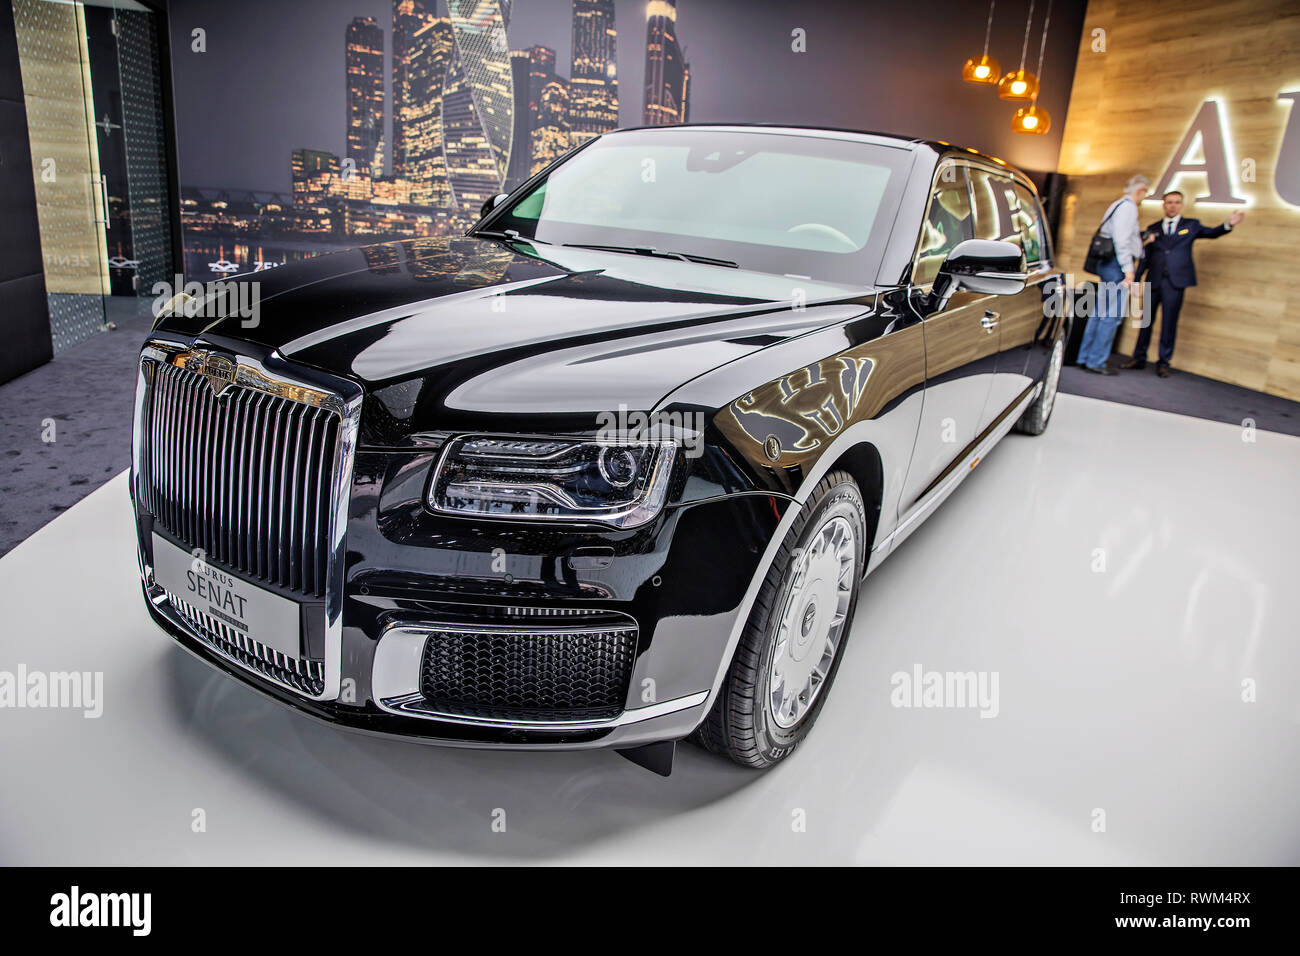 Aurus Senat: the luxury limousine used by Putin during swearing-in